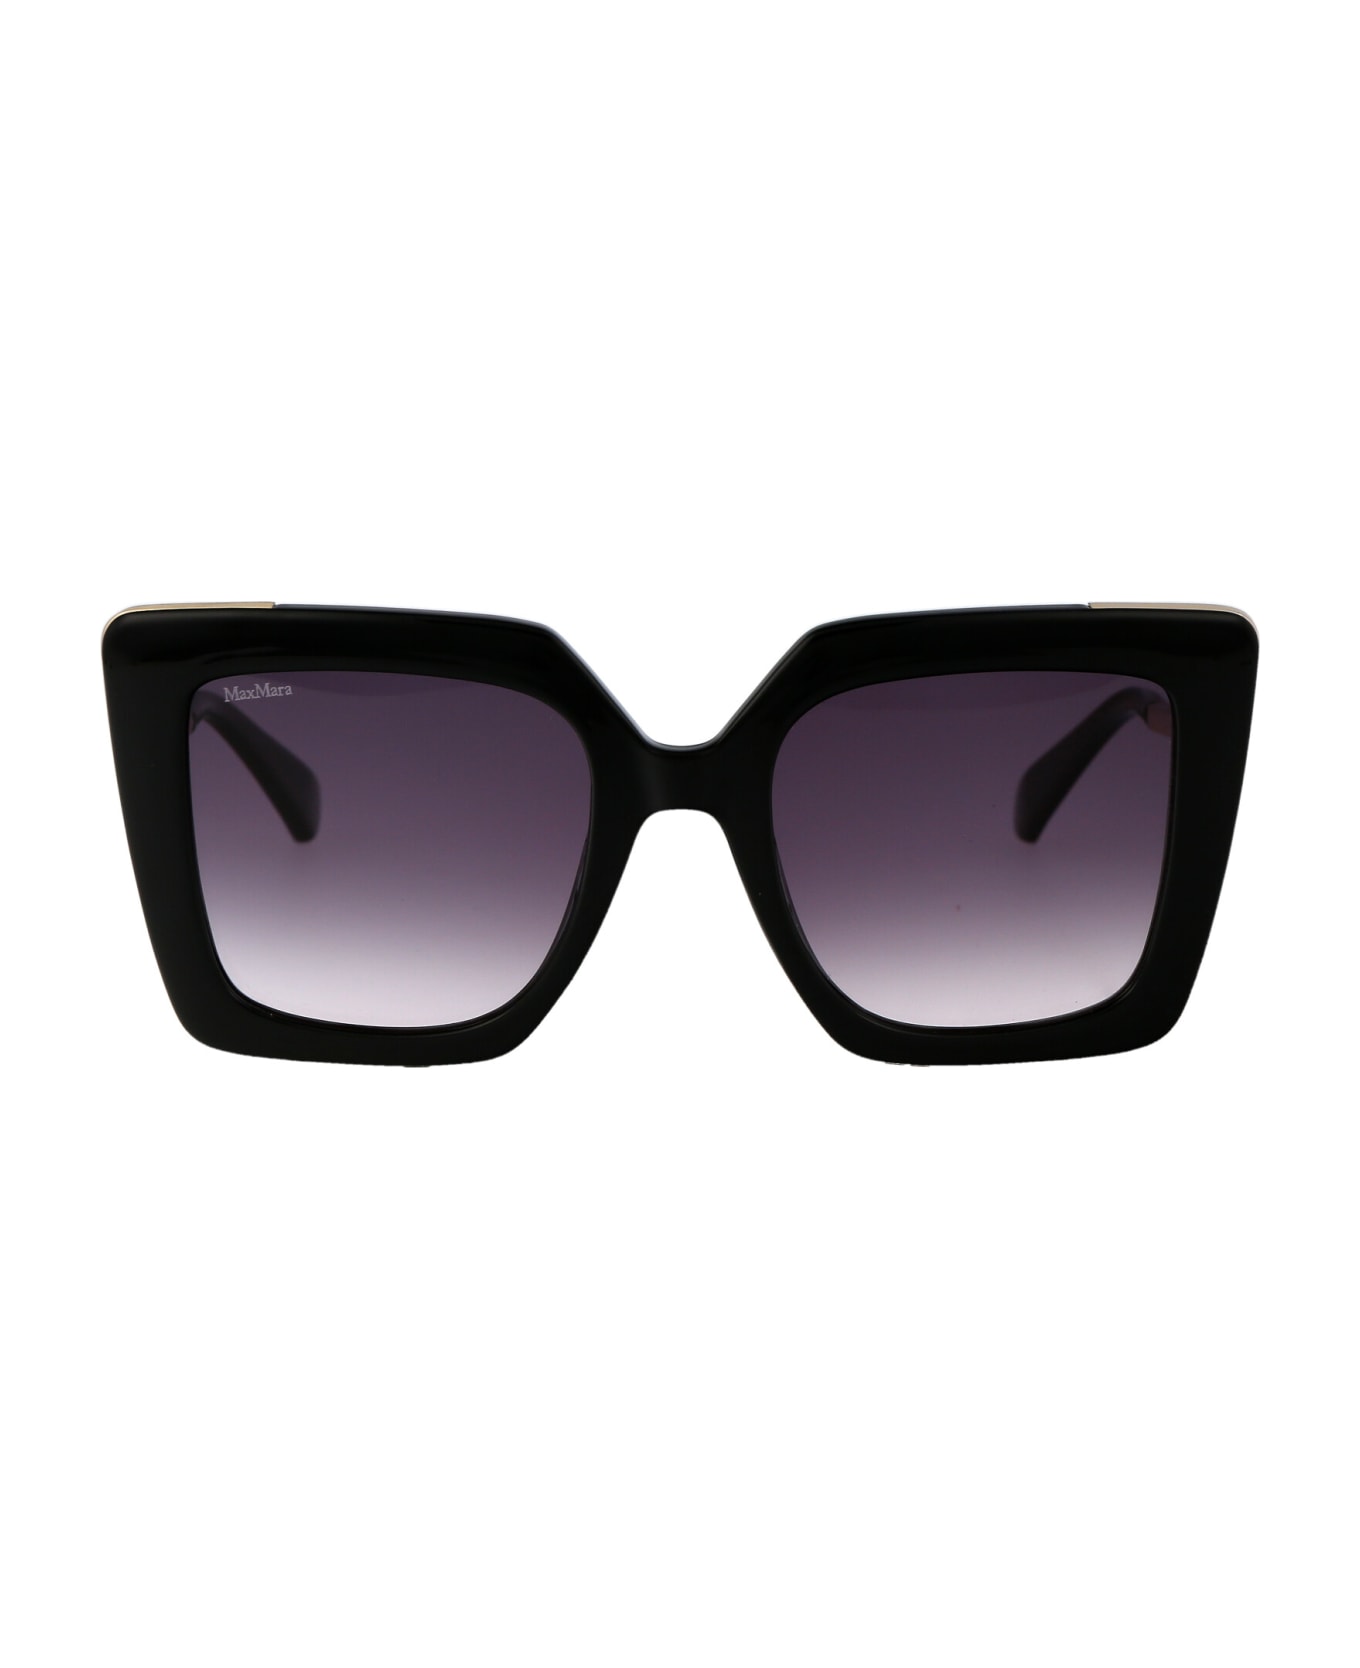 Max Mara Design4 Sunglasses - 01B Nero Lucido/Fumo Grad サングラス